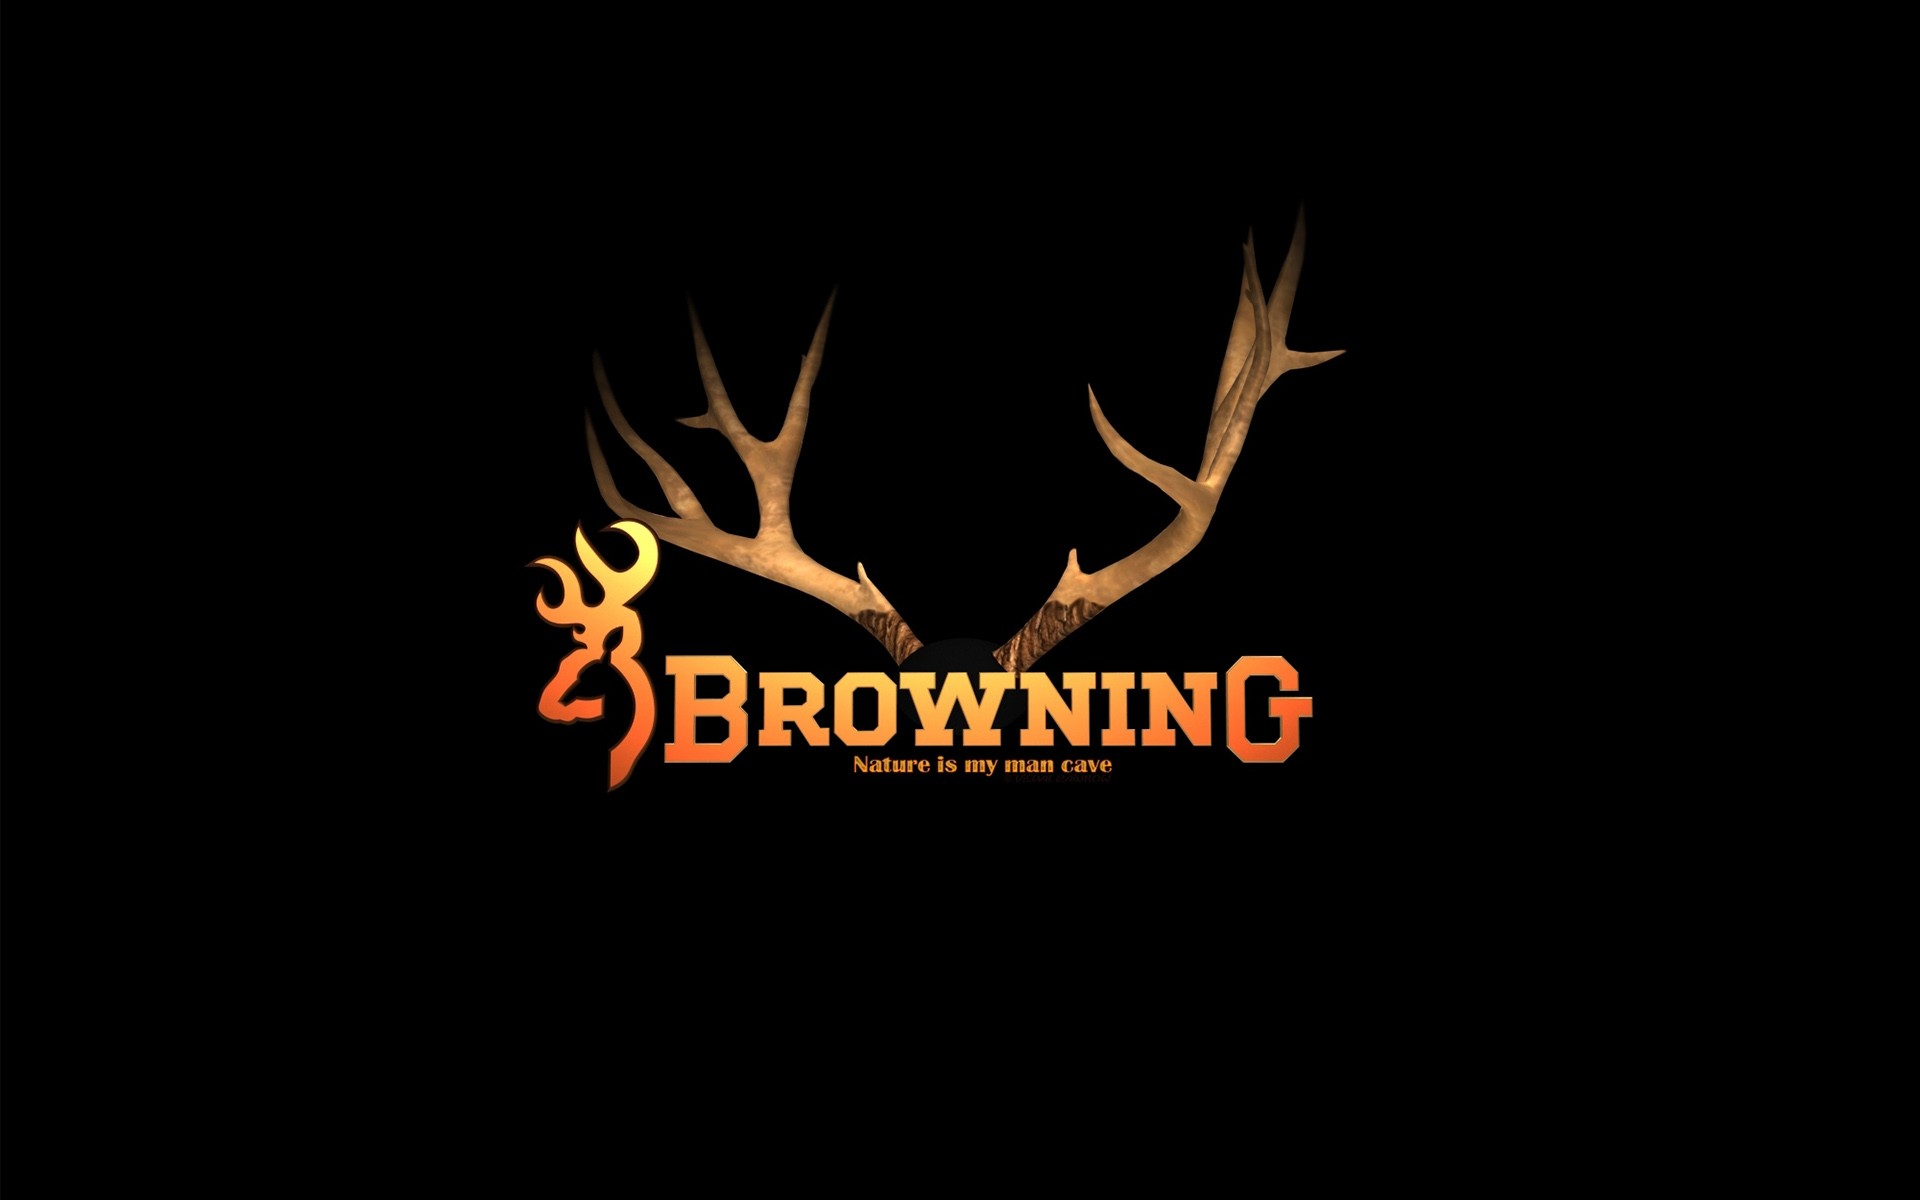 1920x1200 Browning Logo Desktop Wallpaper Images Pictures Becuo 